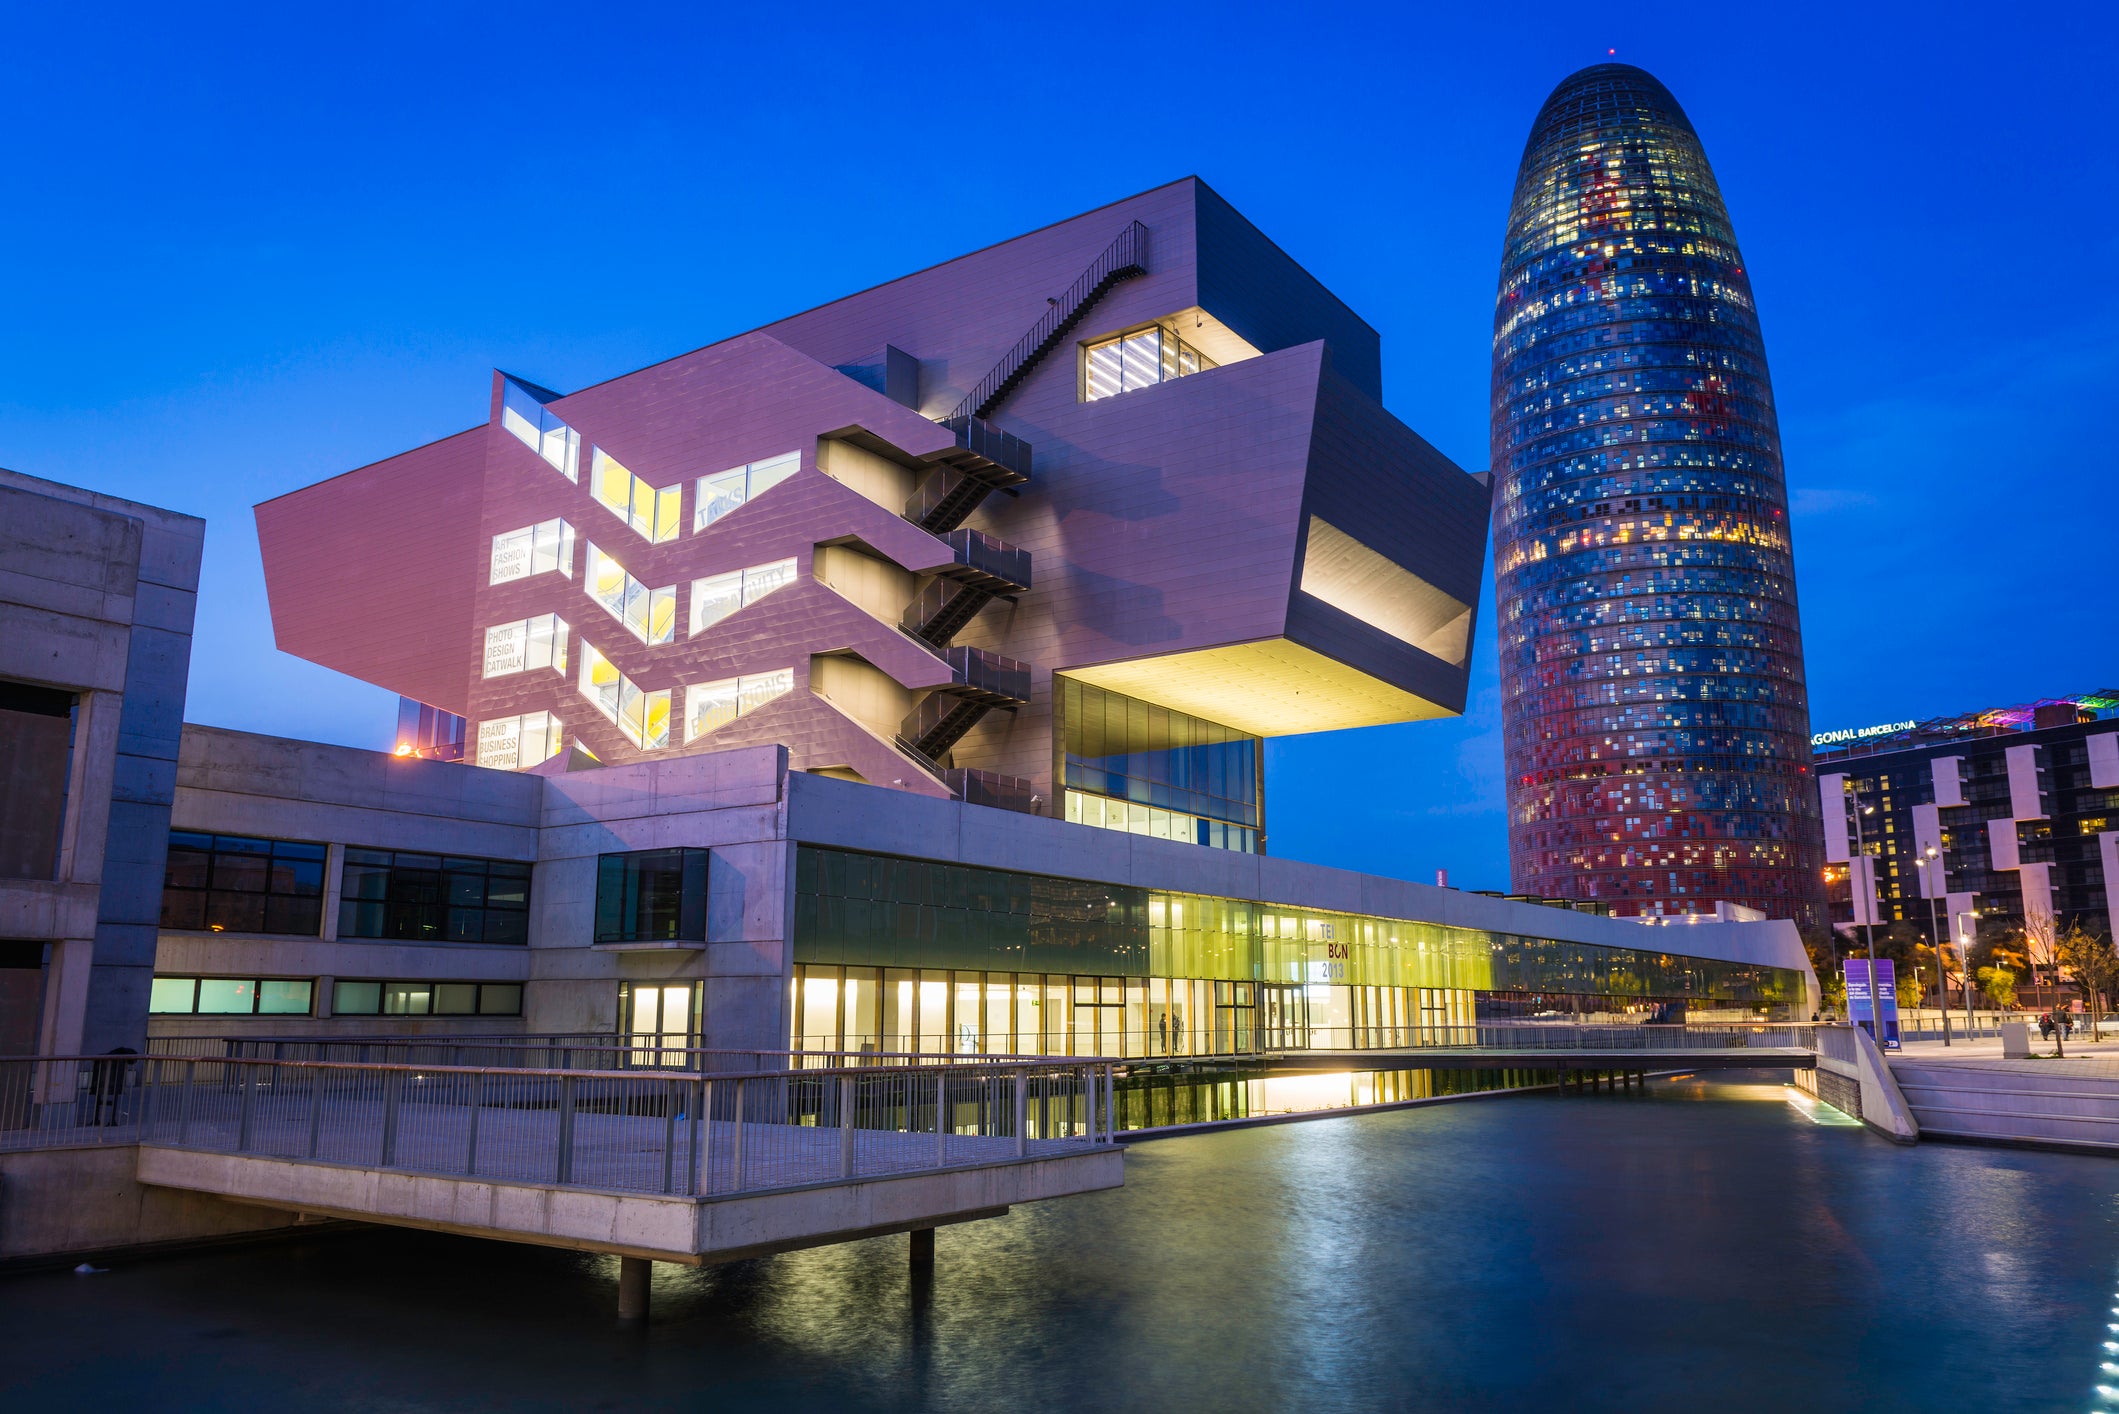 Modernista art: the Design Museum of Barcelona